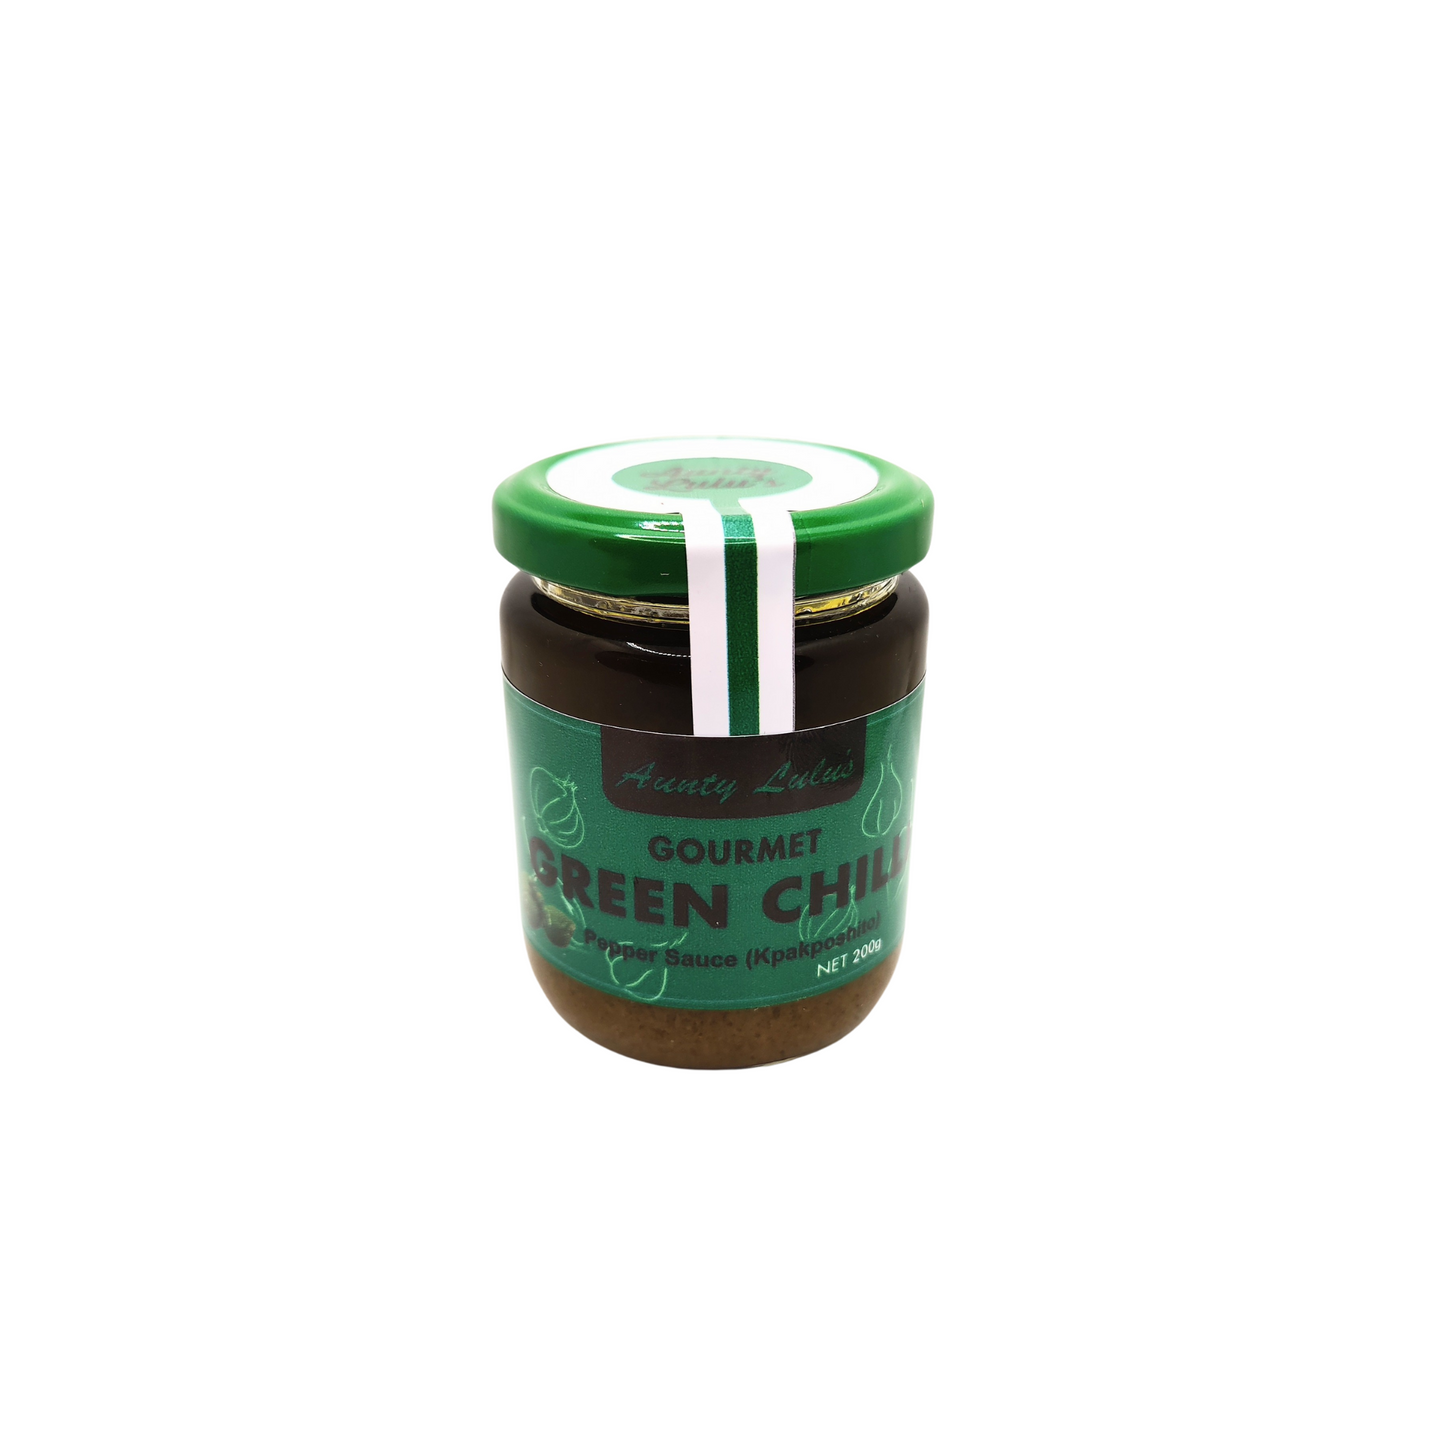 200 gram jar of aunty lulu's gourmet green chili sauce